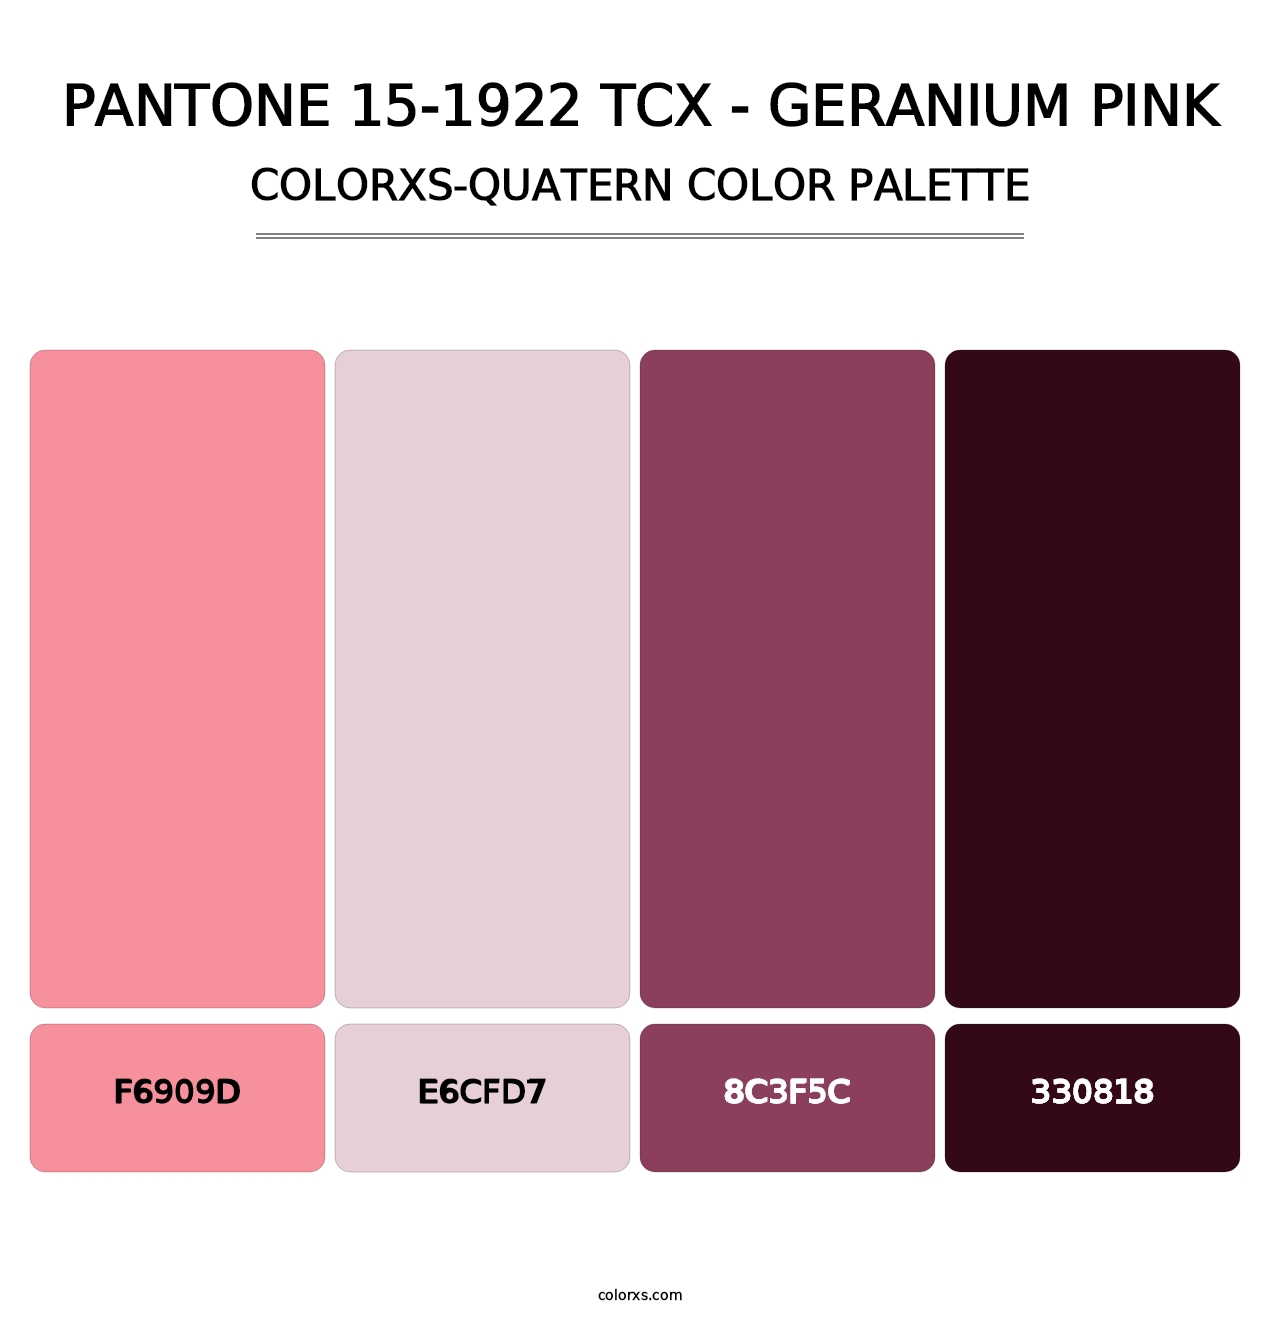 PANTONE 15-1922 TCX - Geranium Pink - Colorxs Quatern Palette